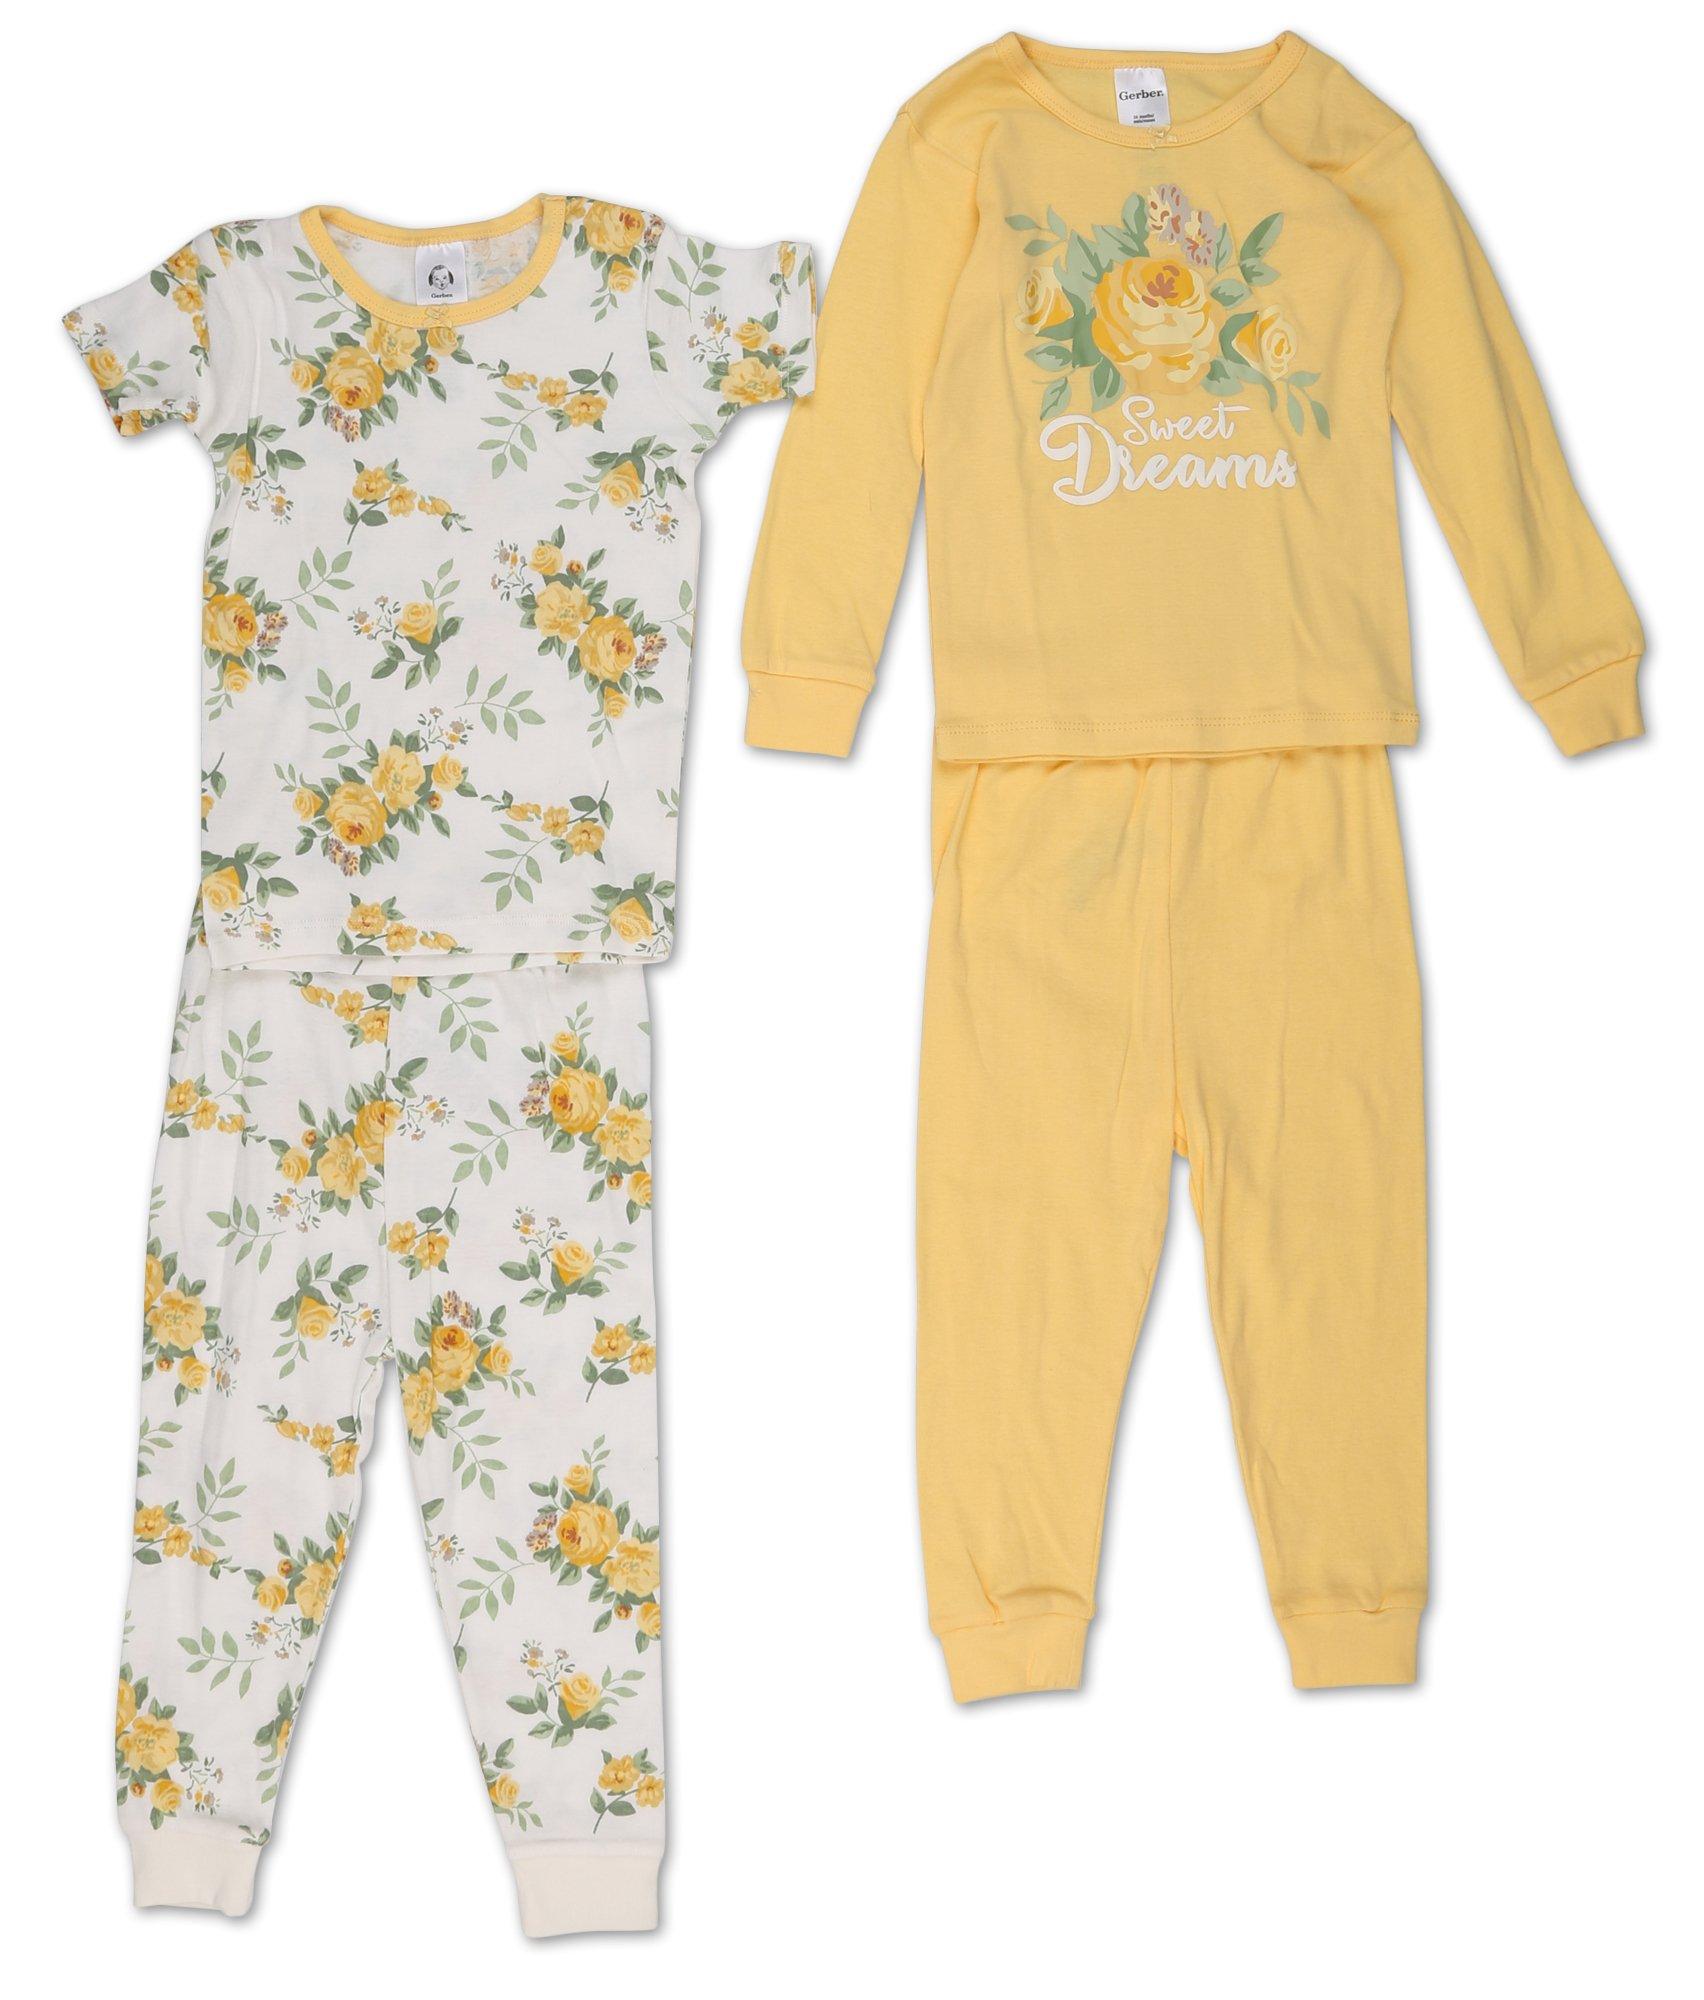 Baby Girls 4 Pc Pajama Set